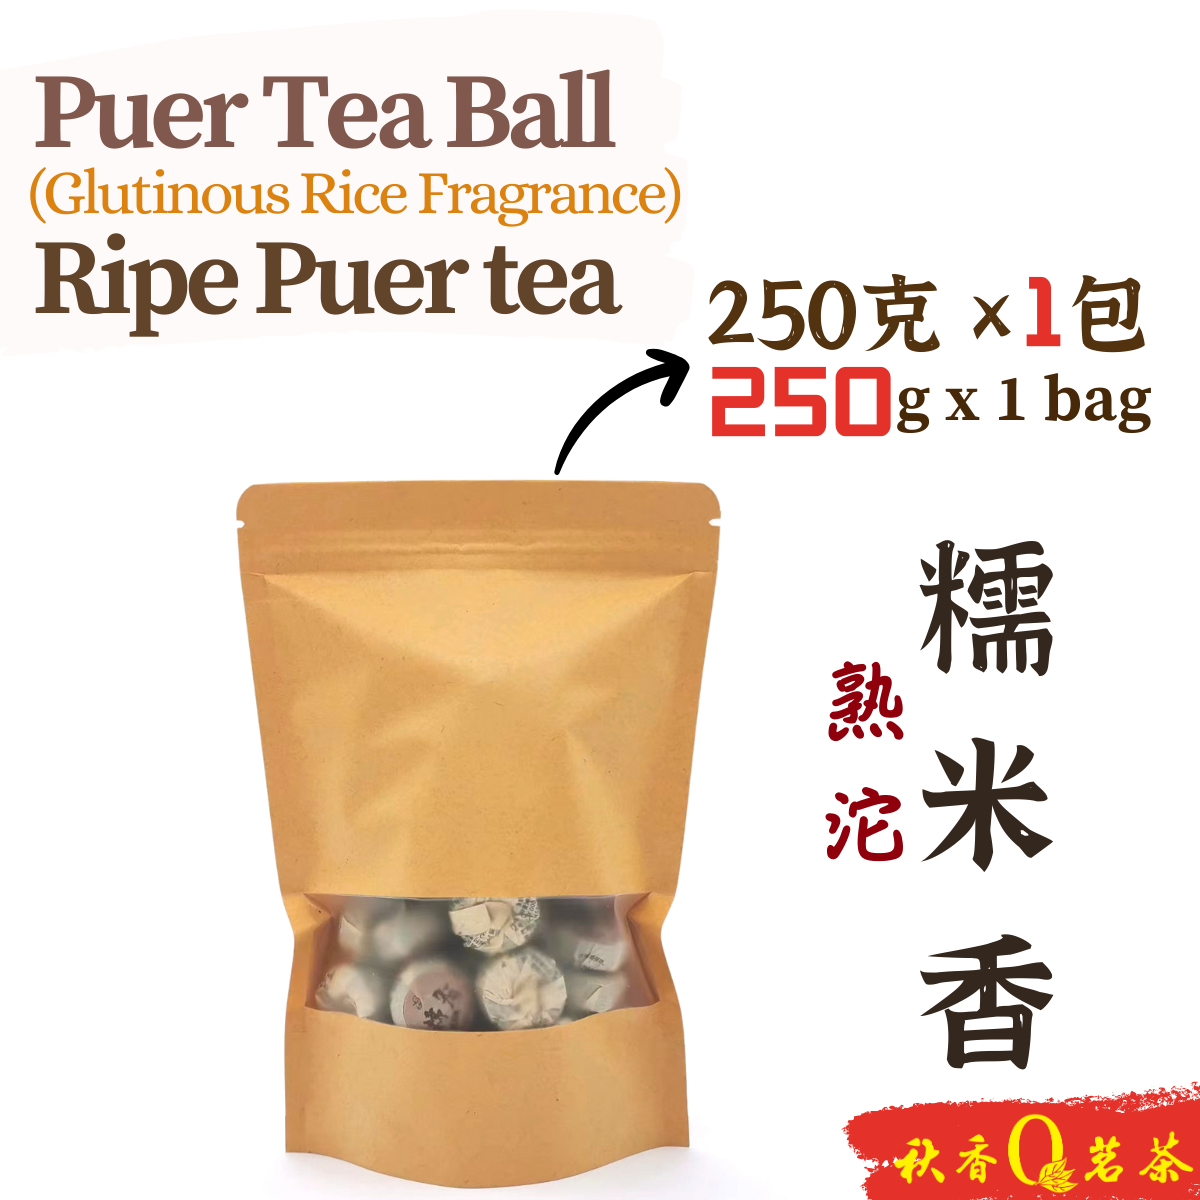 普洱茶 糯米香熟沱 Ripe Puer Tea Ball (Glutinous Rice Fragrance)【250g】|【普洱熟茶 Ripe Puer tea】